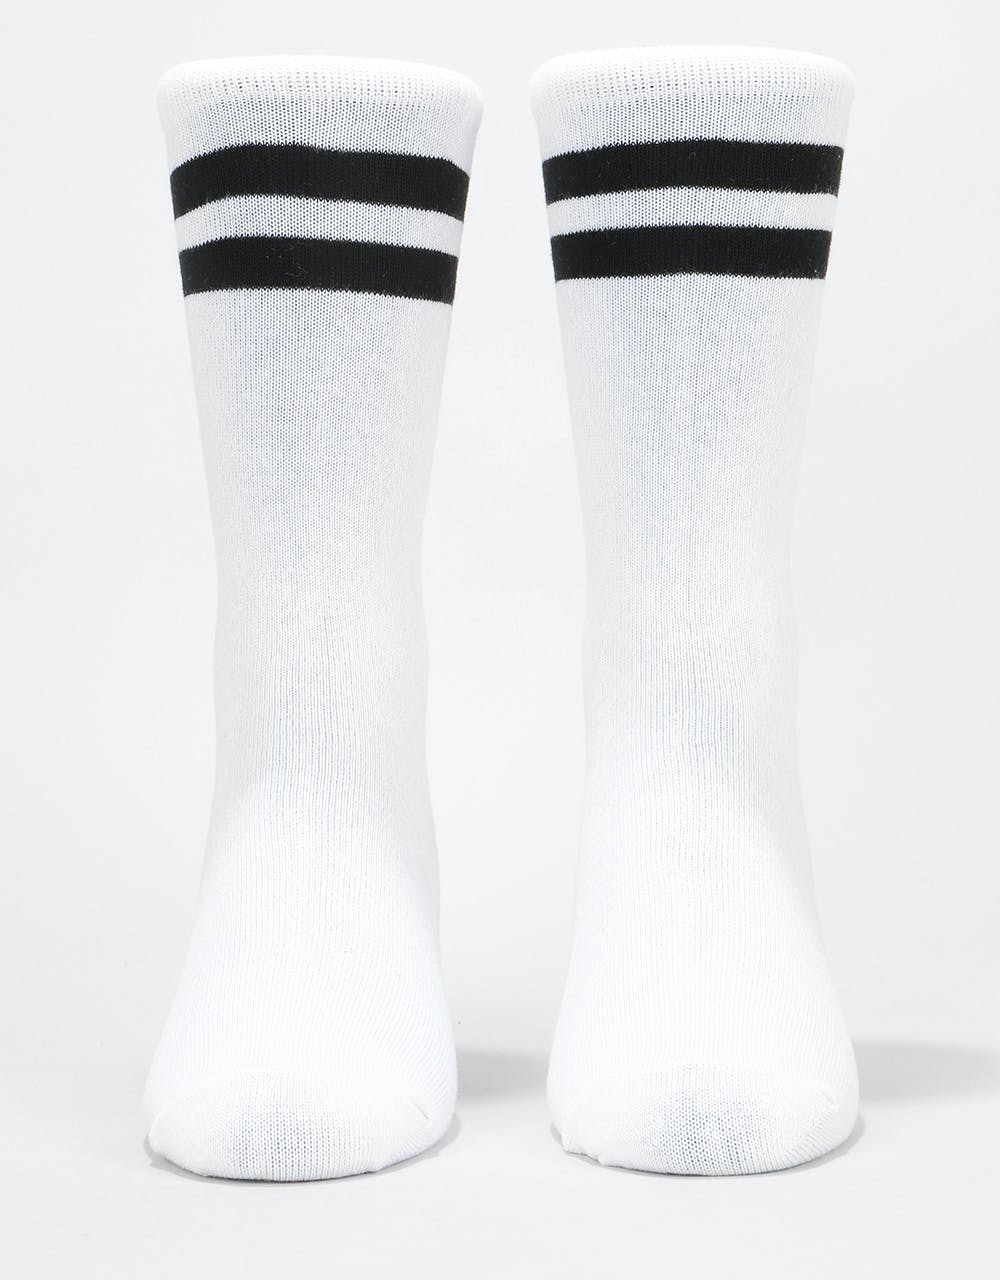 Carhartt WIP College Socks - White/Black